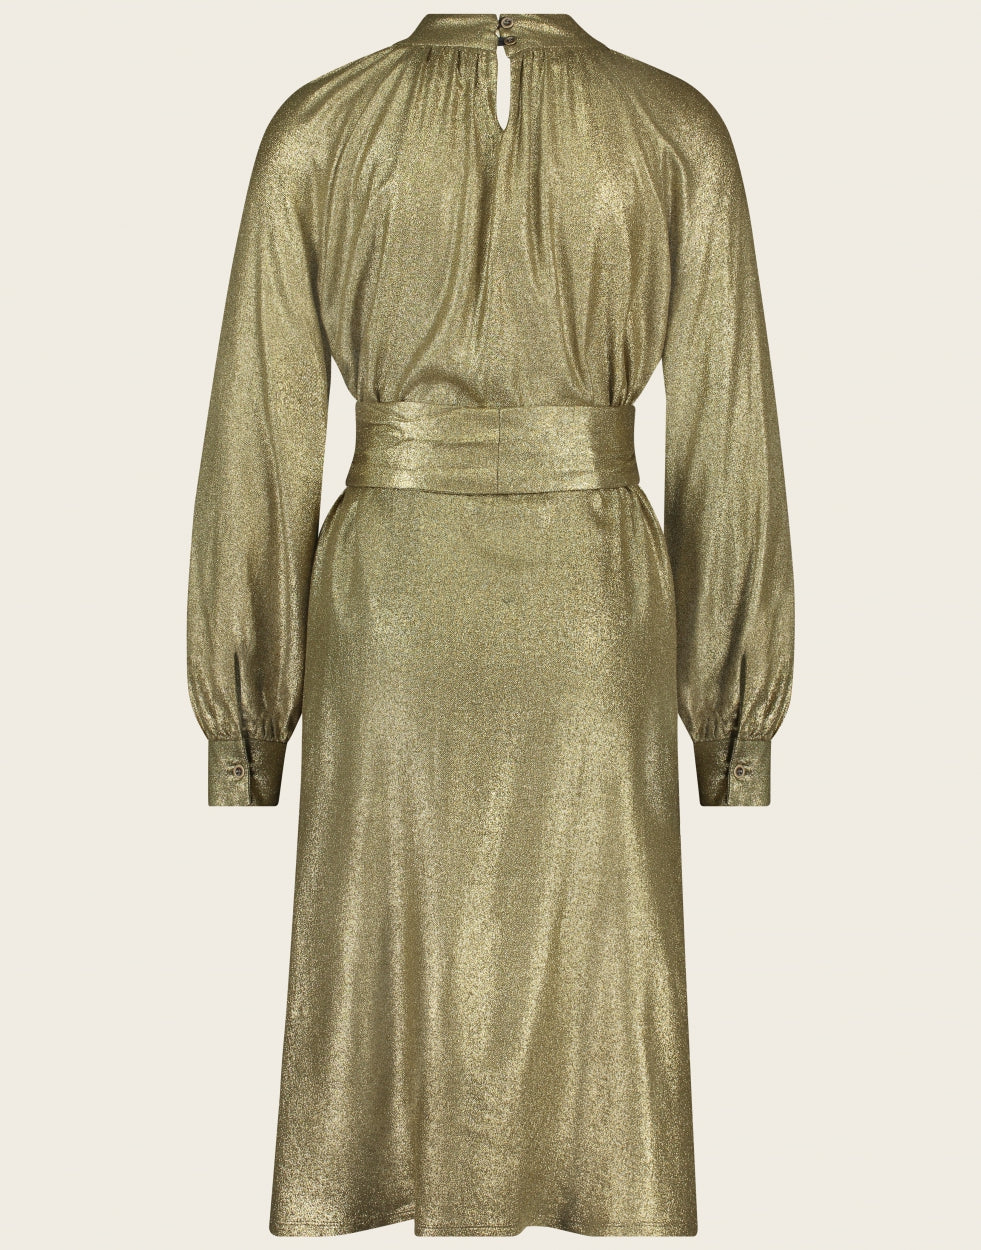 Dress Grace | Gold metallic shiny